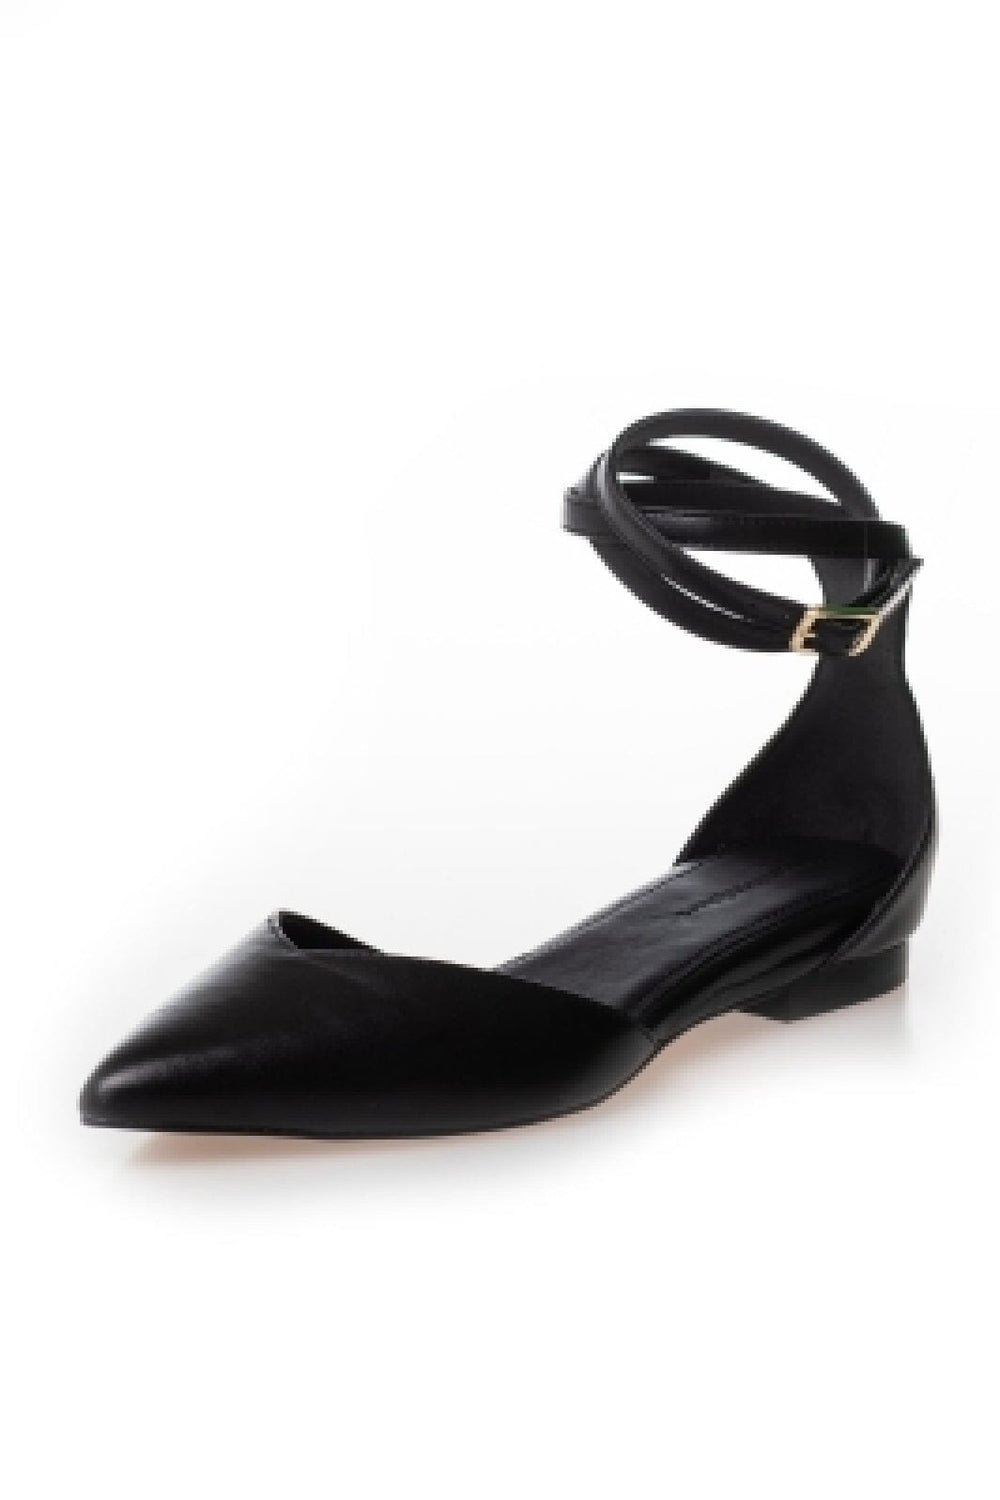 Forudbestilling - Copenhagen Shoes by Josefine Valentin - Flower Child - 0001 Black (Februar/Marts) Ballerinaer 